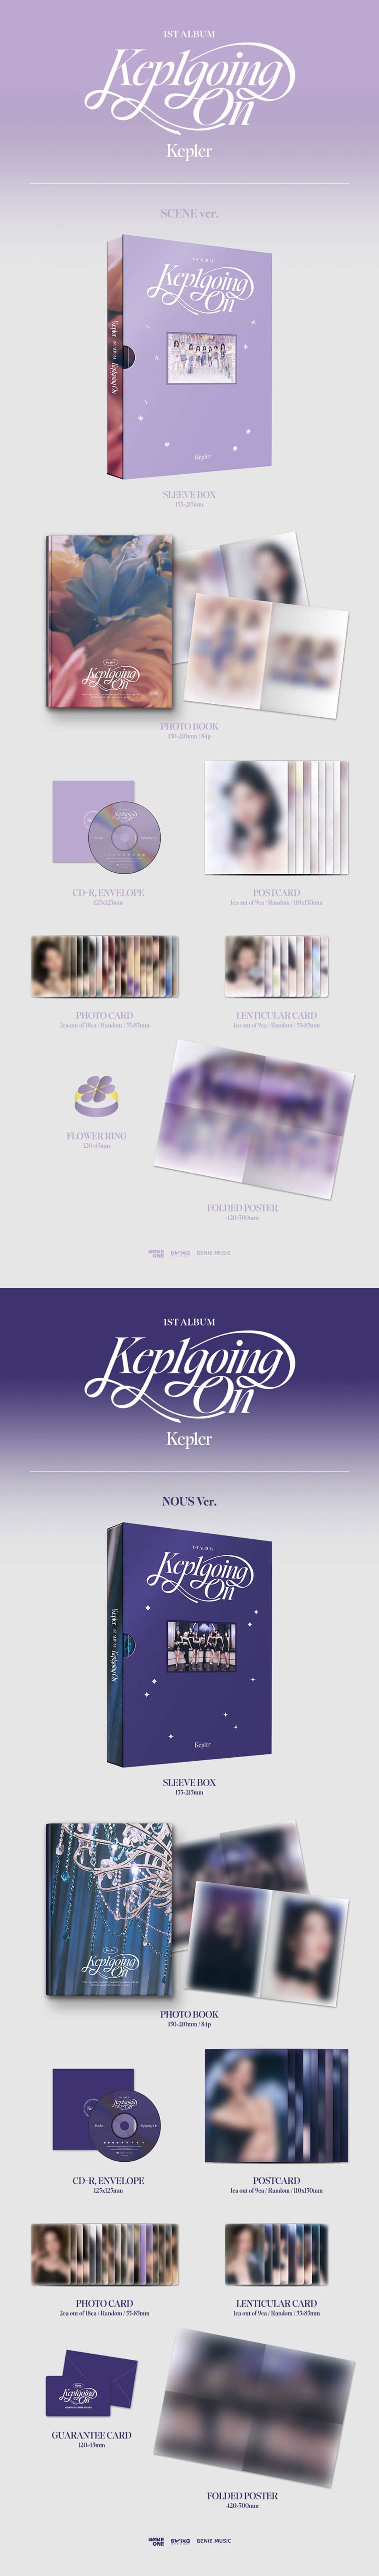 kep1er-1st-album-kep1going-on-wholesales